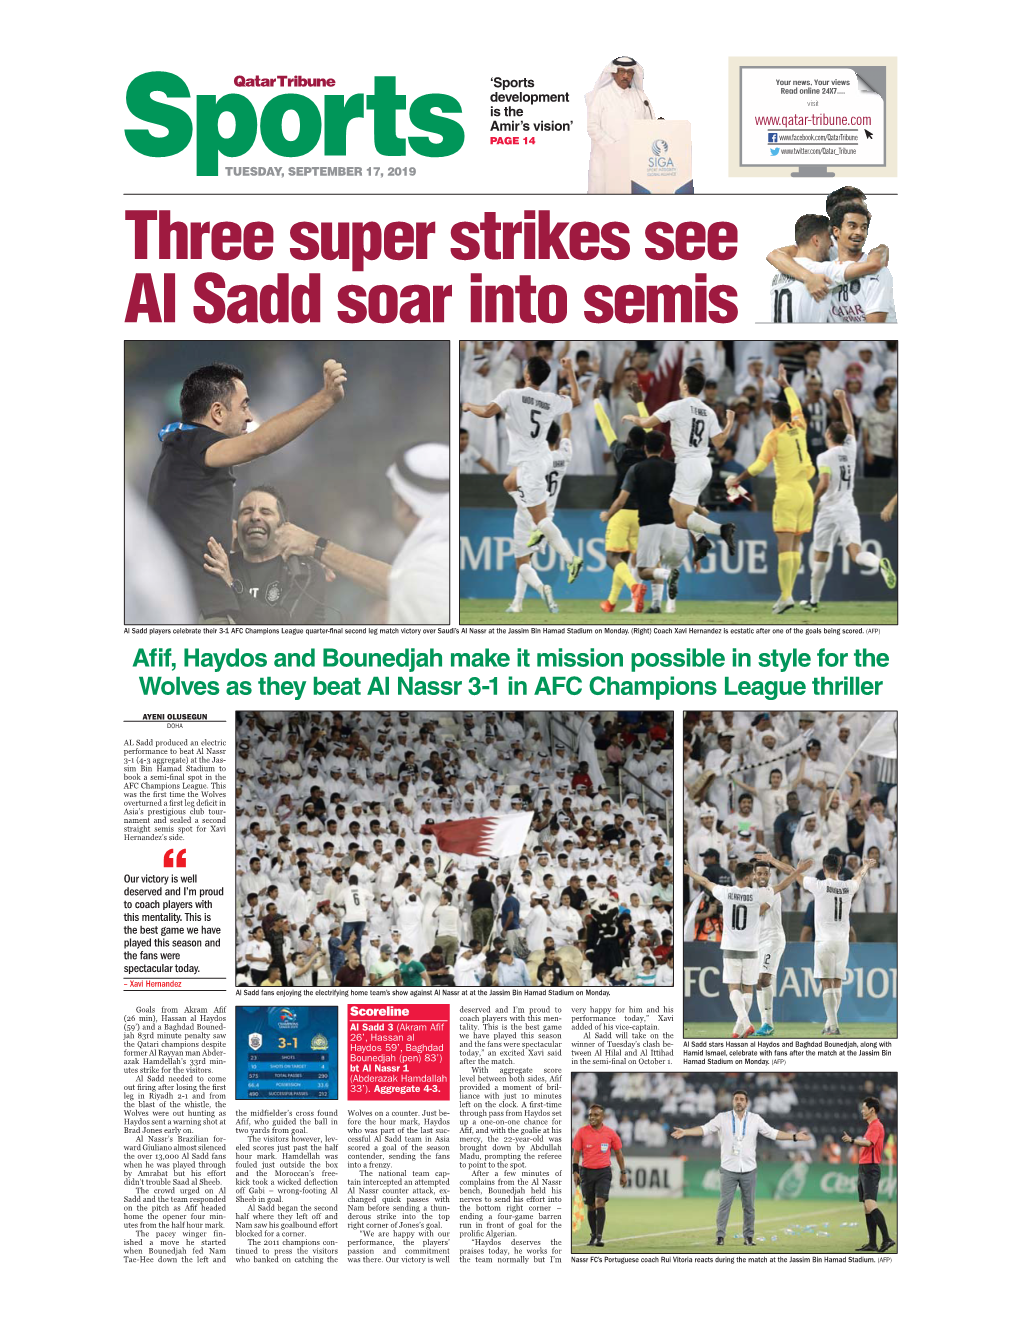 Three Super Strikes See Al Sadd Soar Into Semis